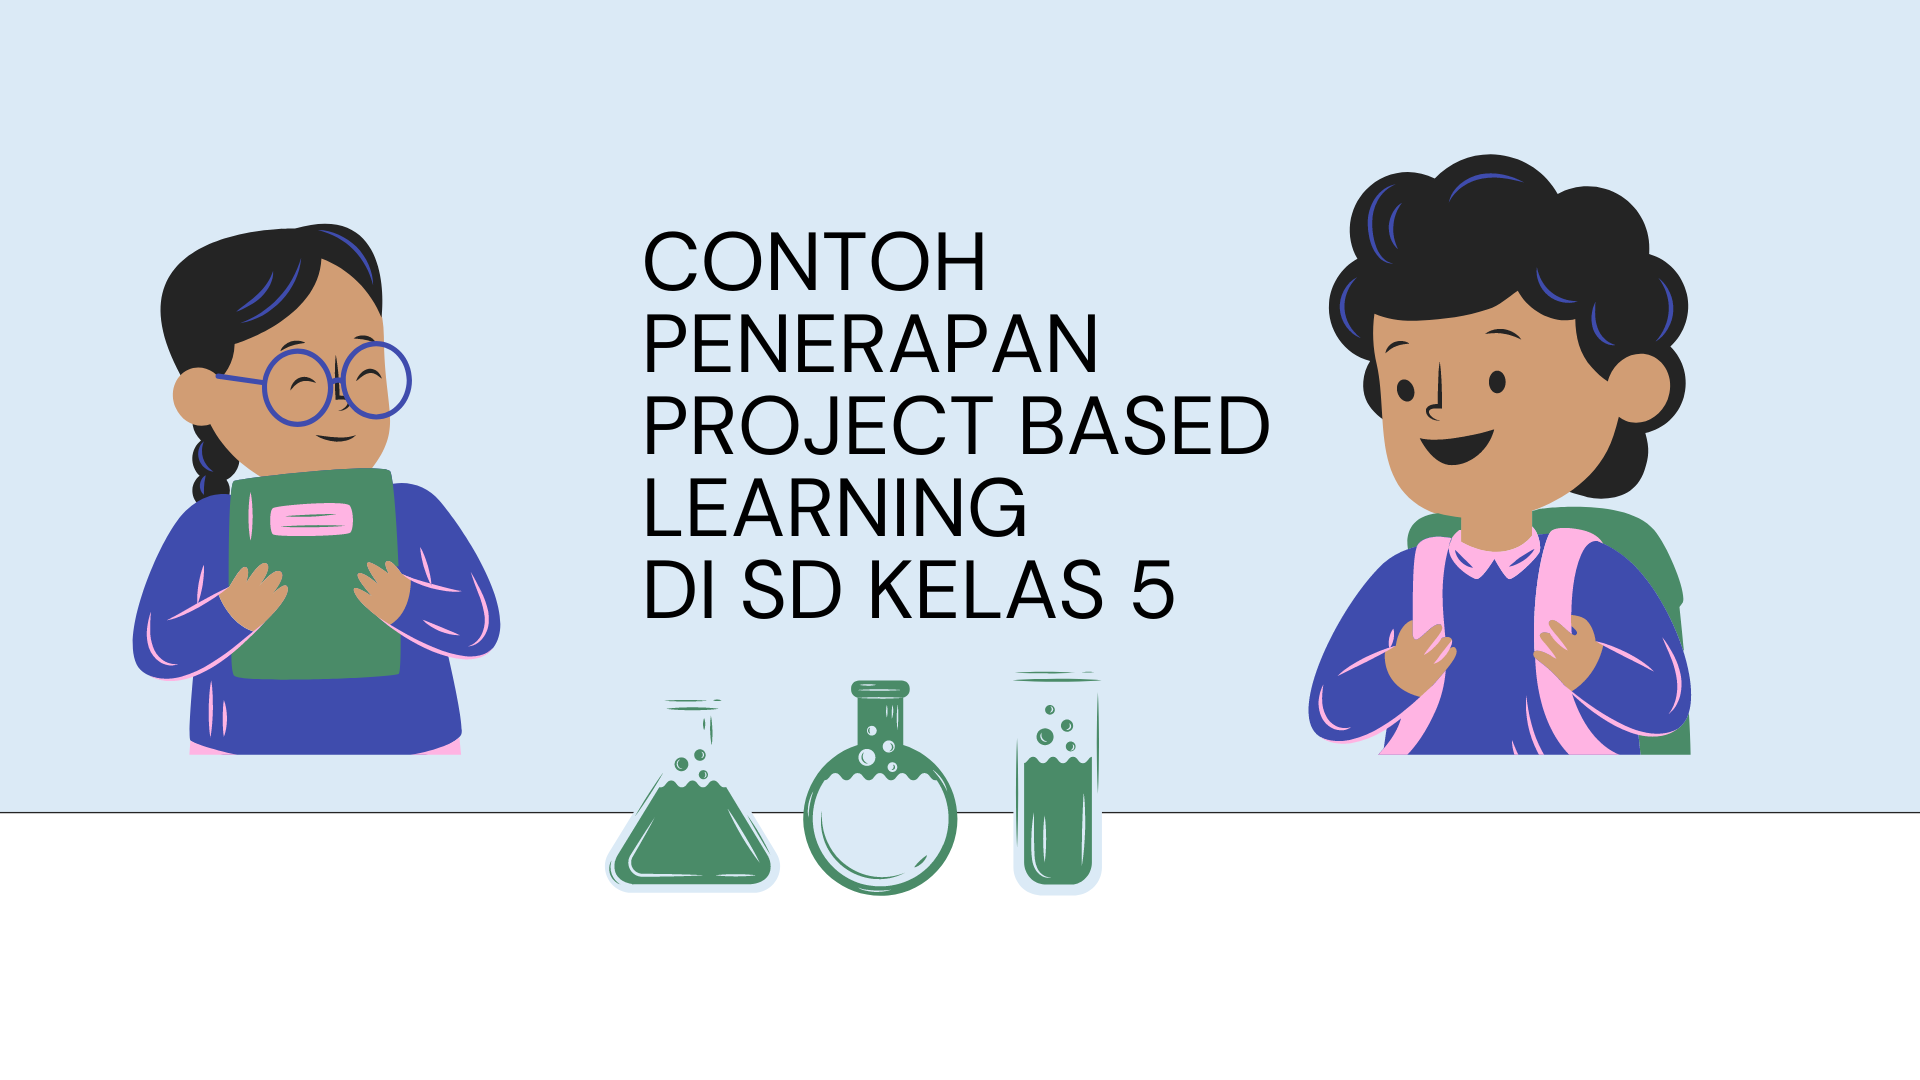 Contoh penerapan project based learning di SD Kelas 5